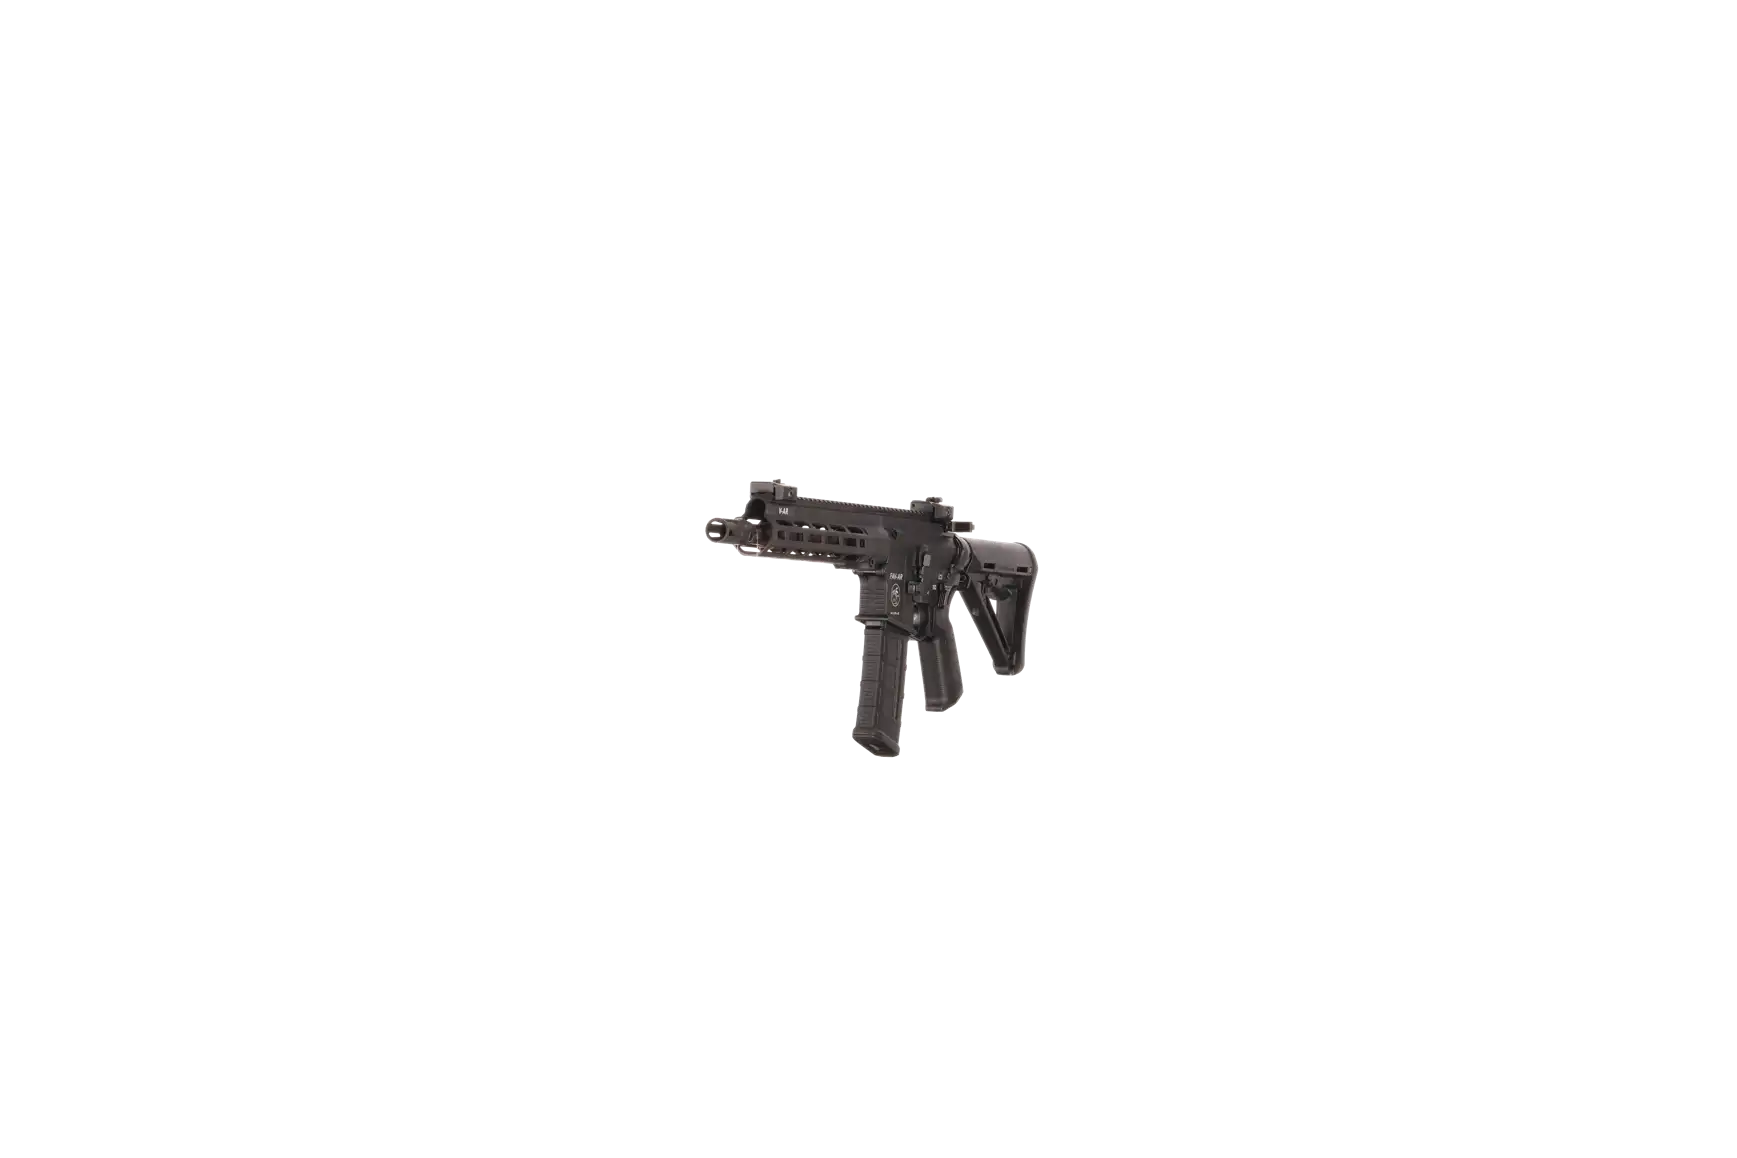 Náhledový obrázek pušky V-AR 556 x 45mm SPINVIEW 1 R23